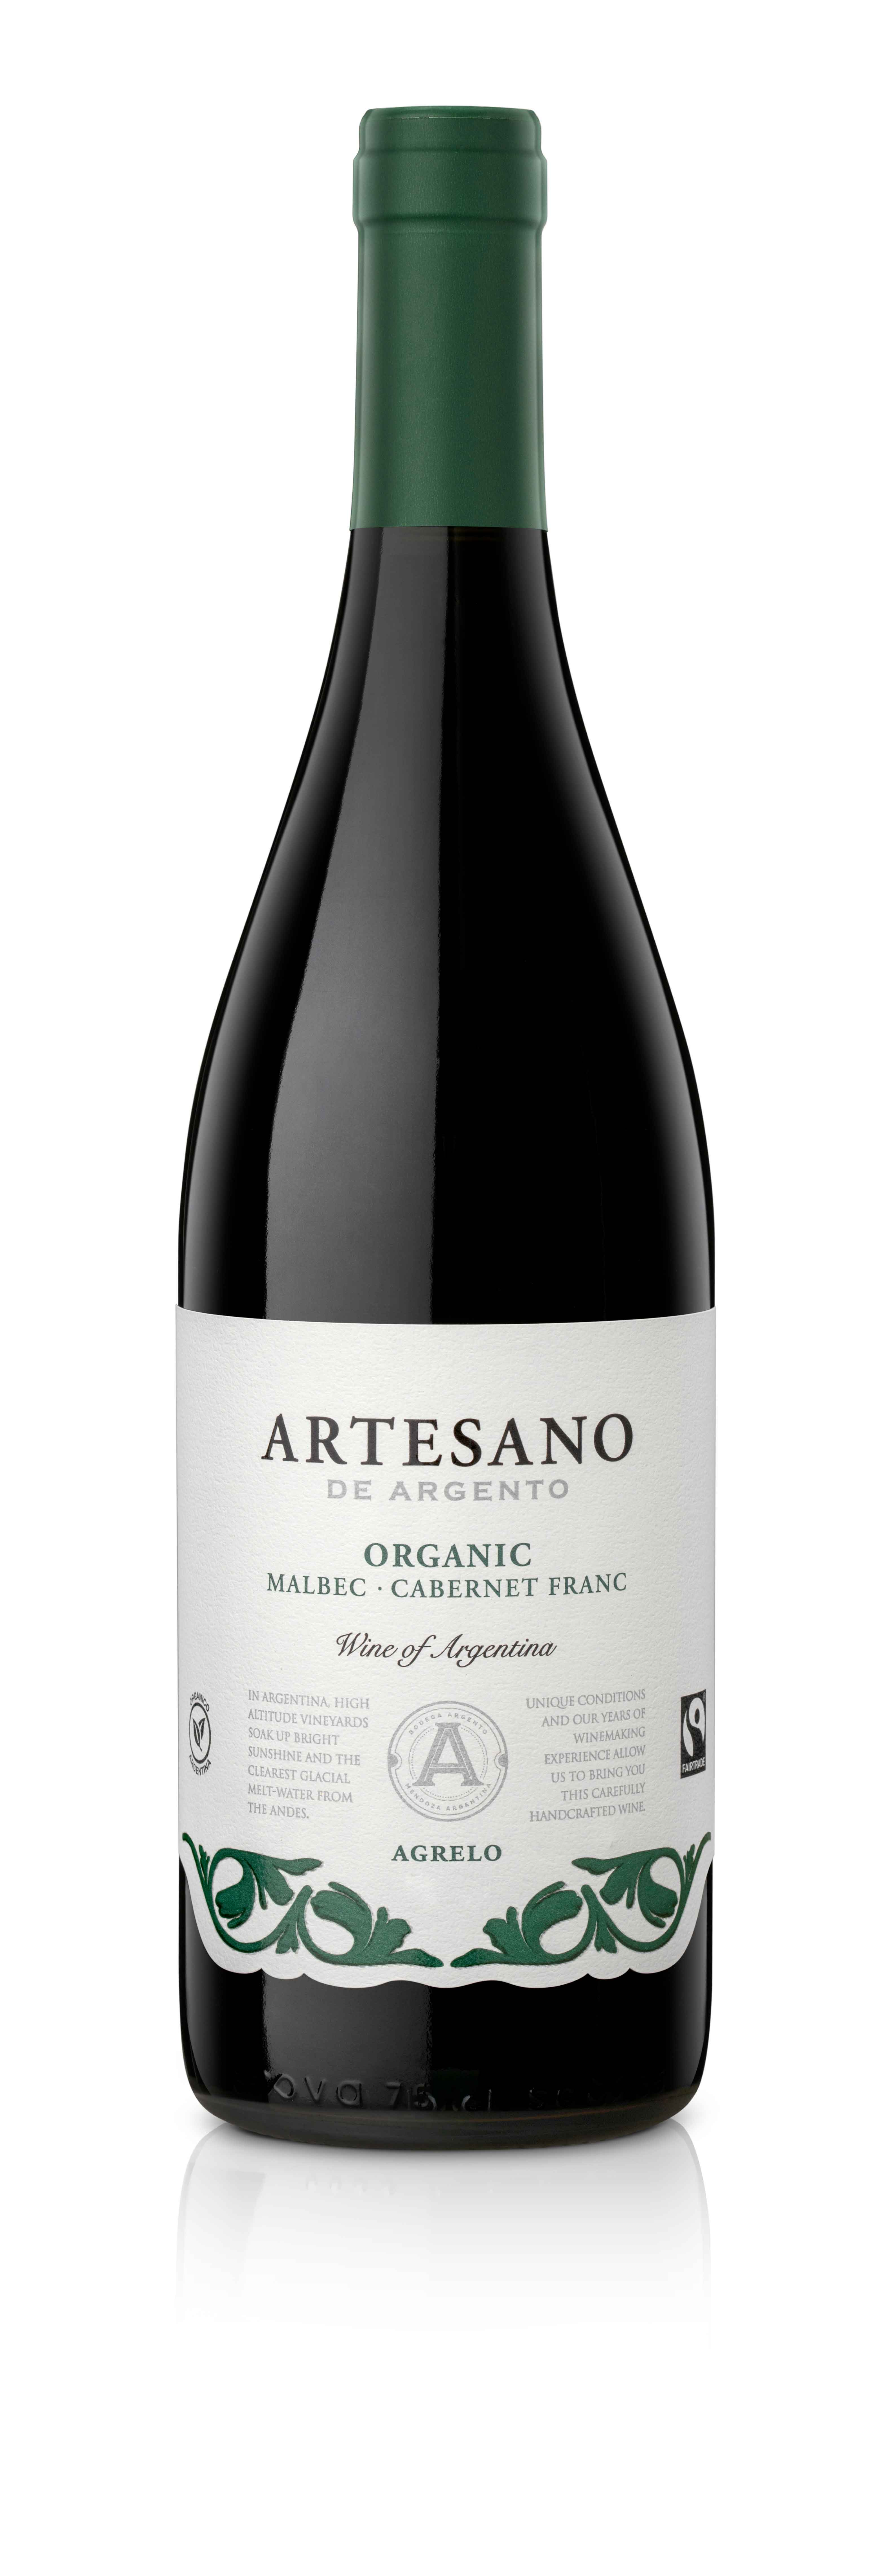 Artesano Organic Malbec-Cabernet Franc